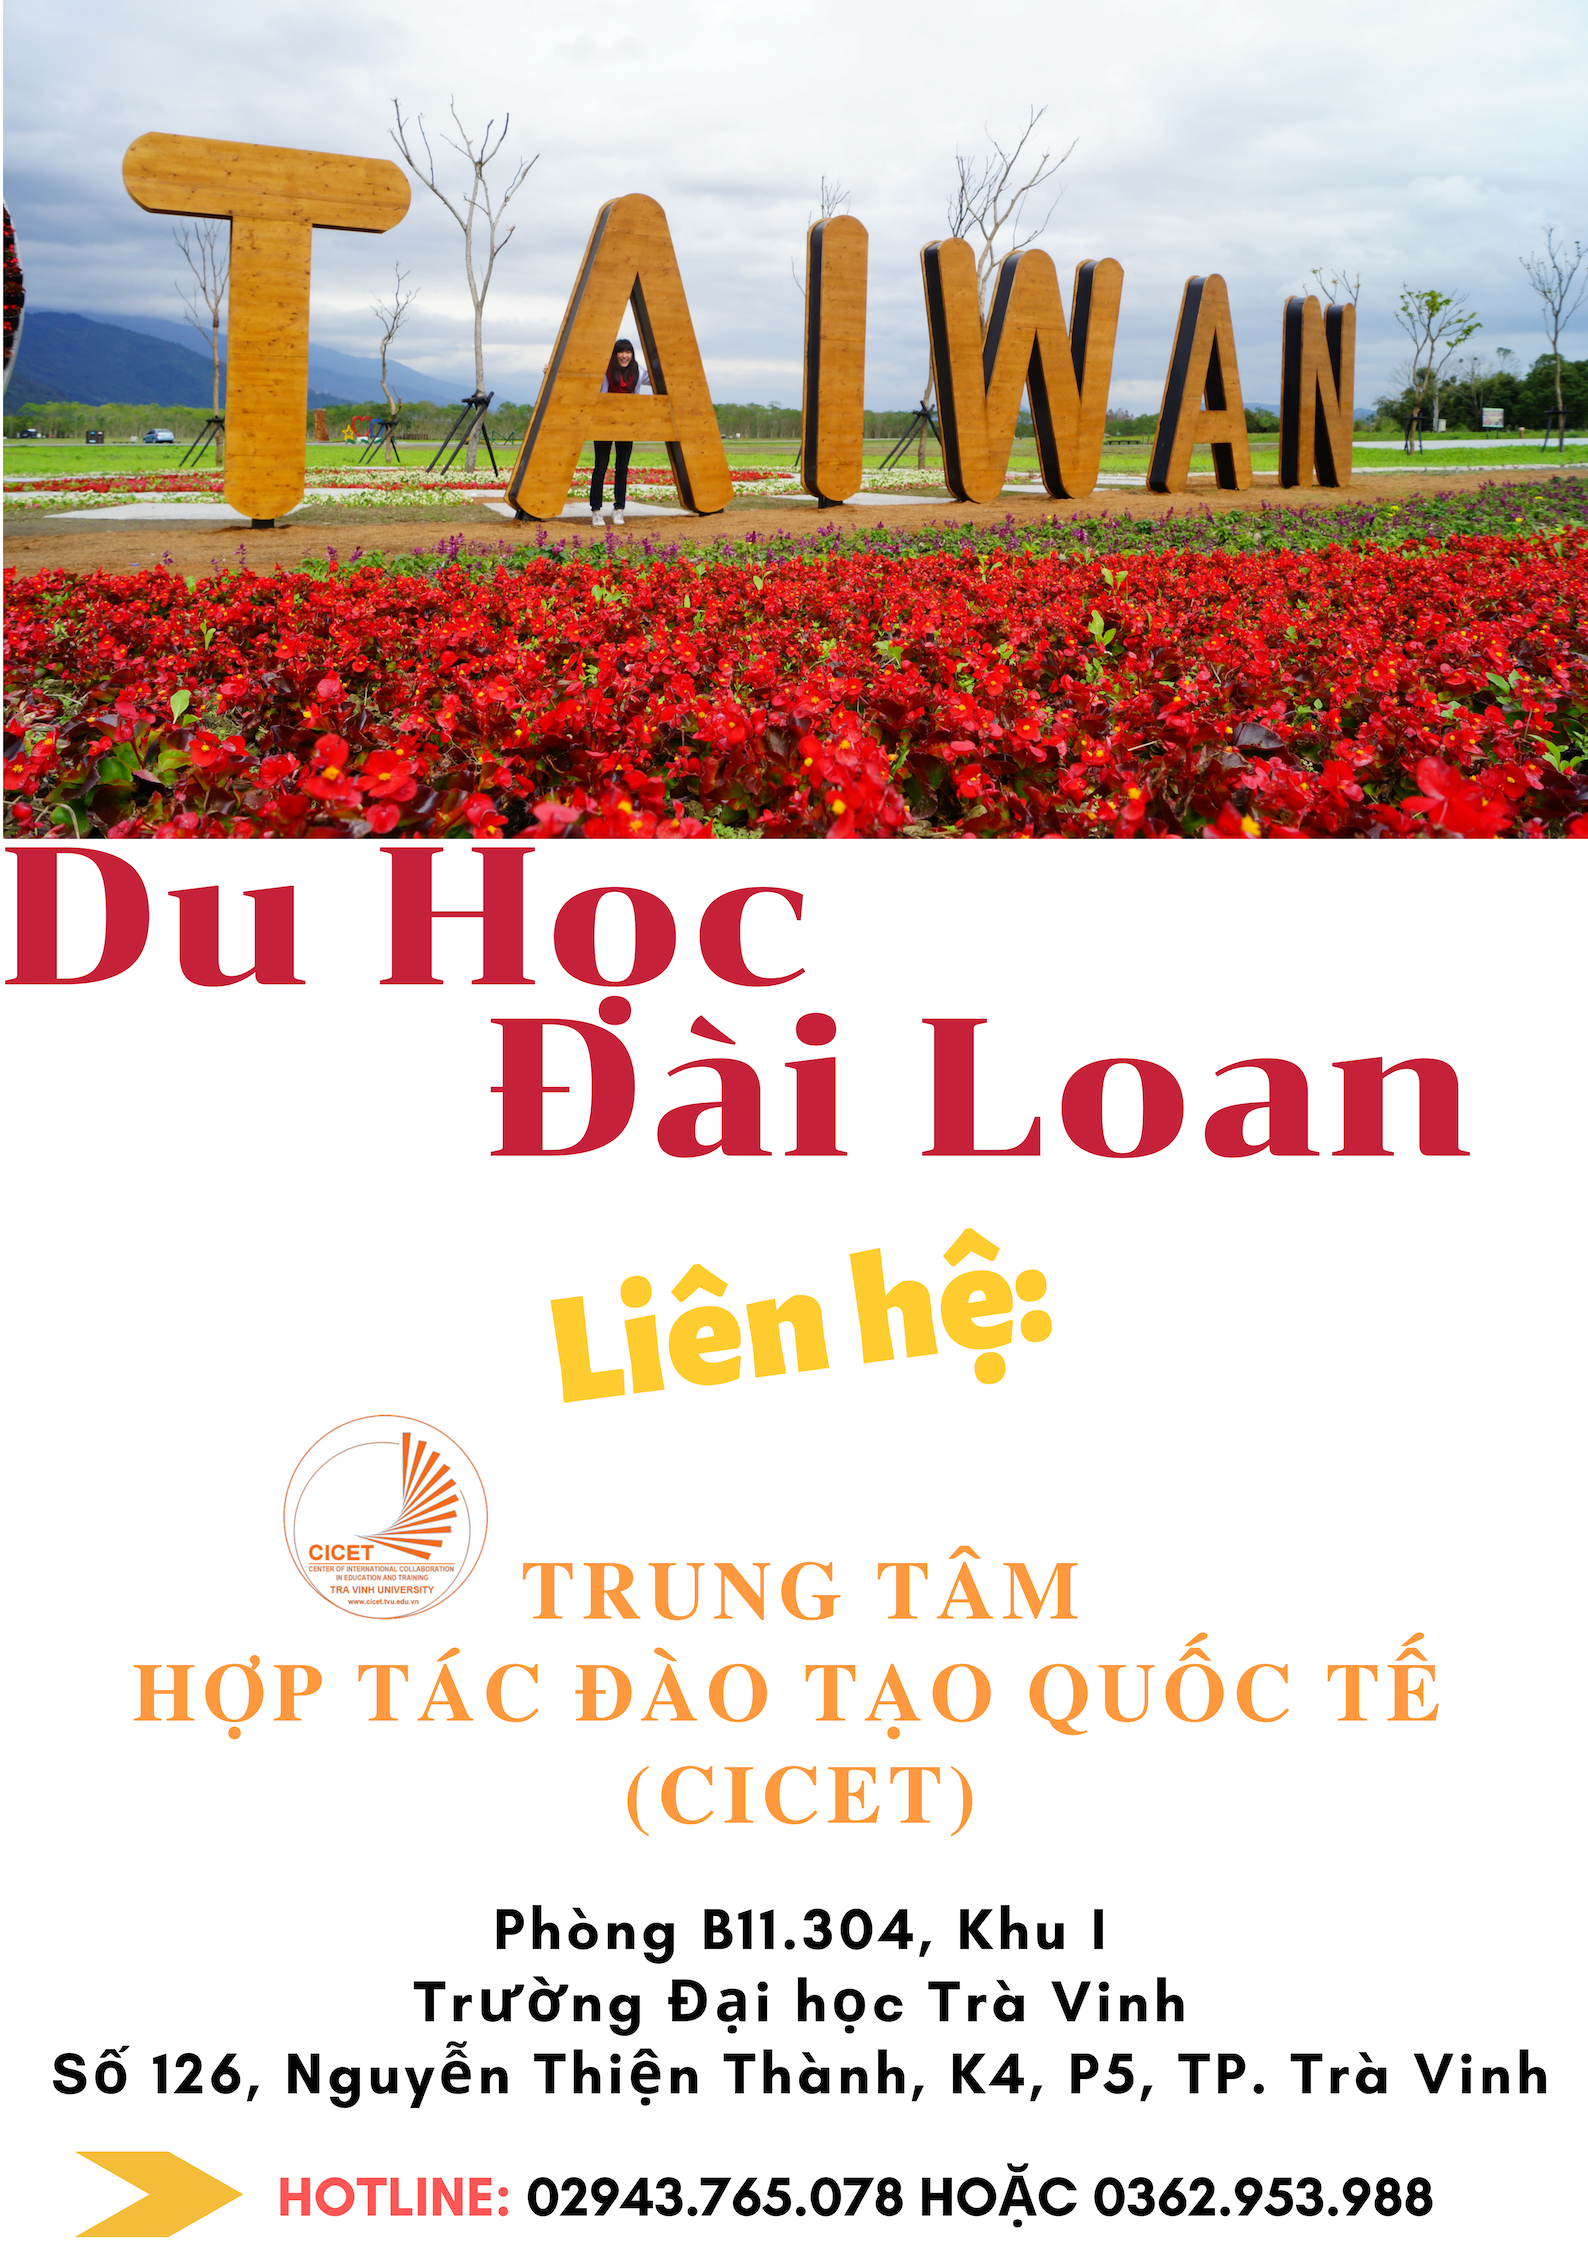 to roi du hoc dai loan 2019 1